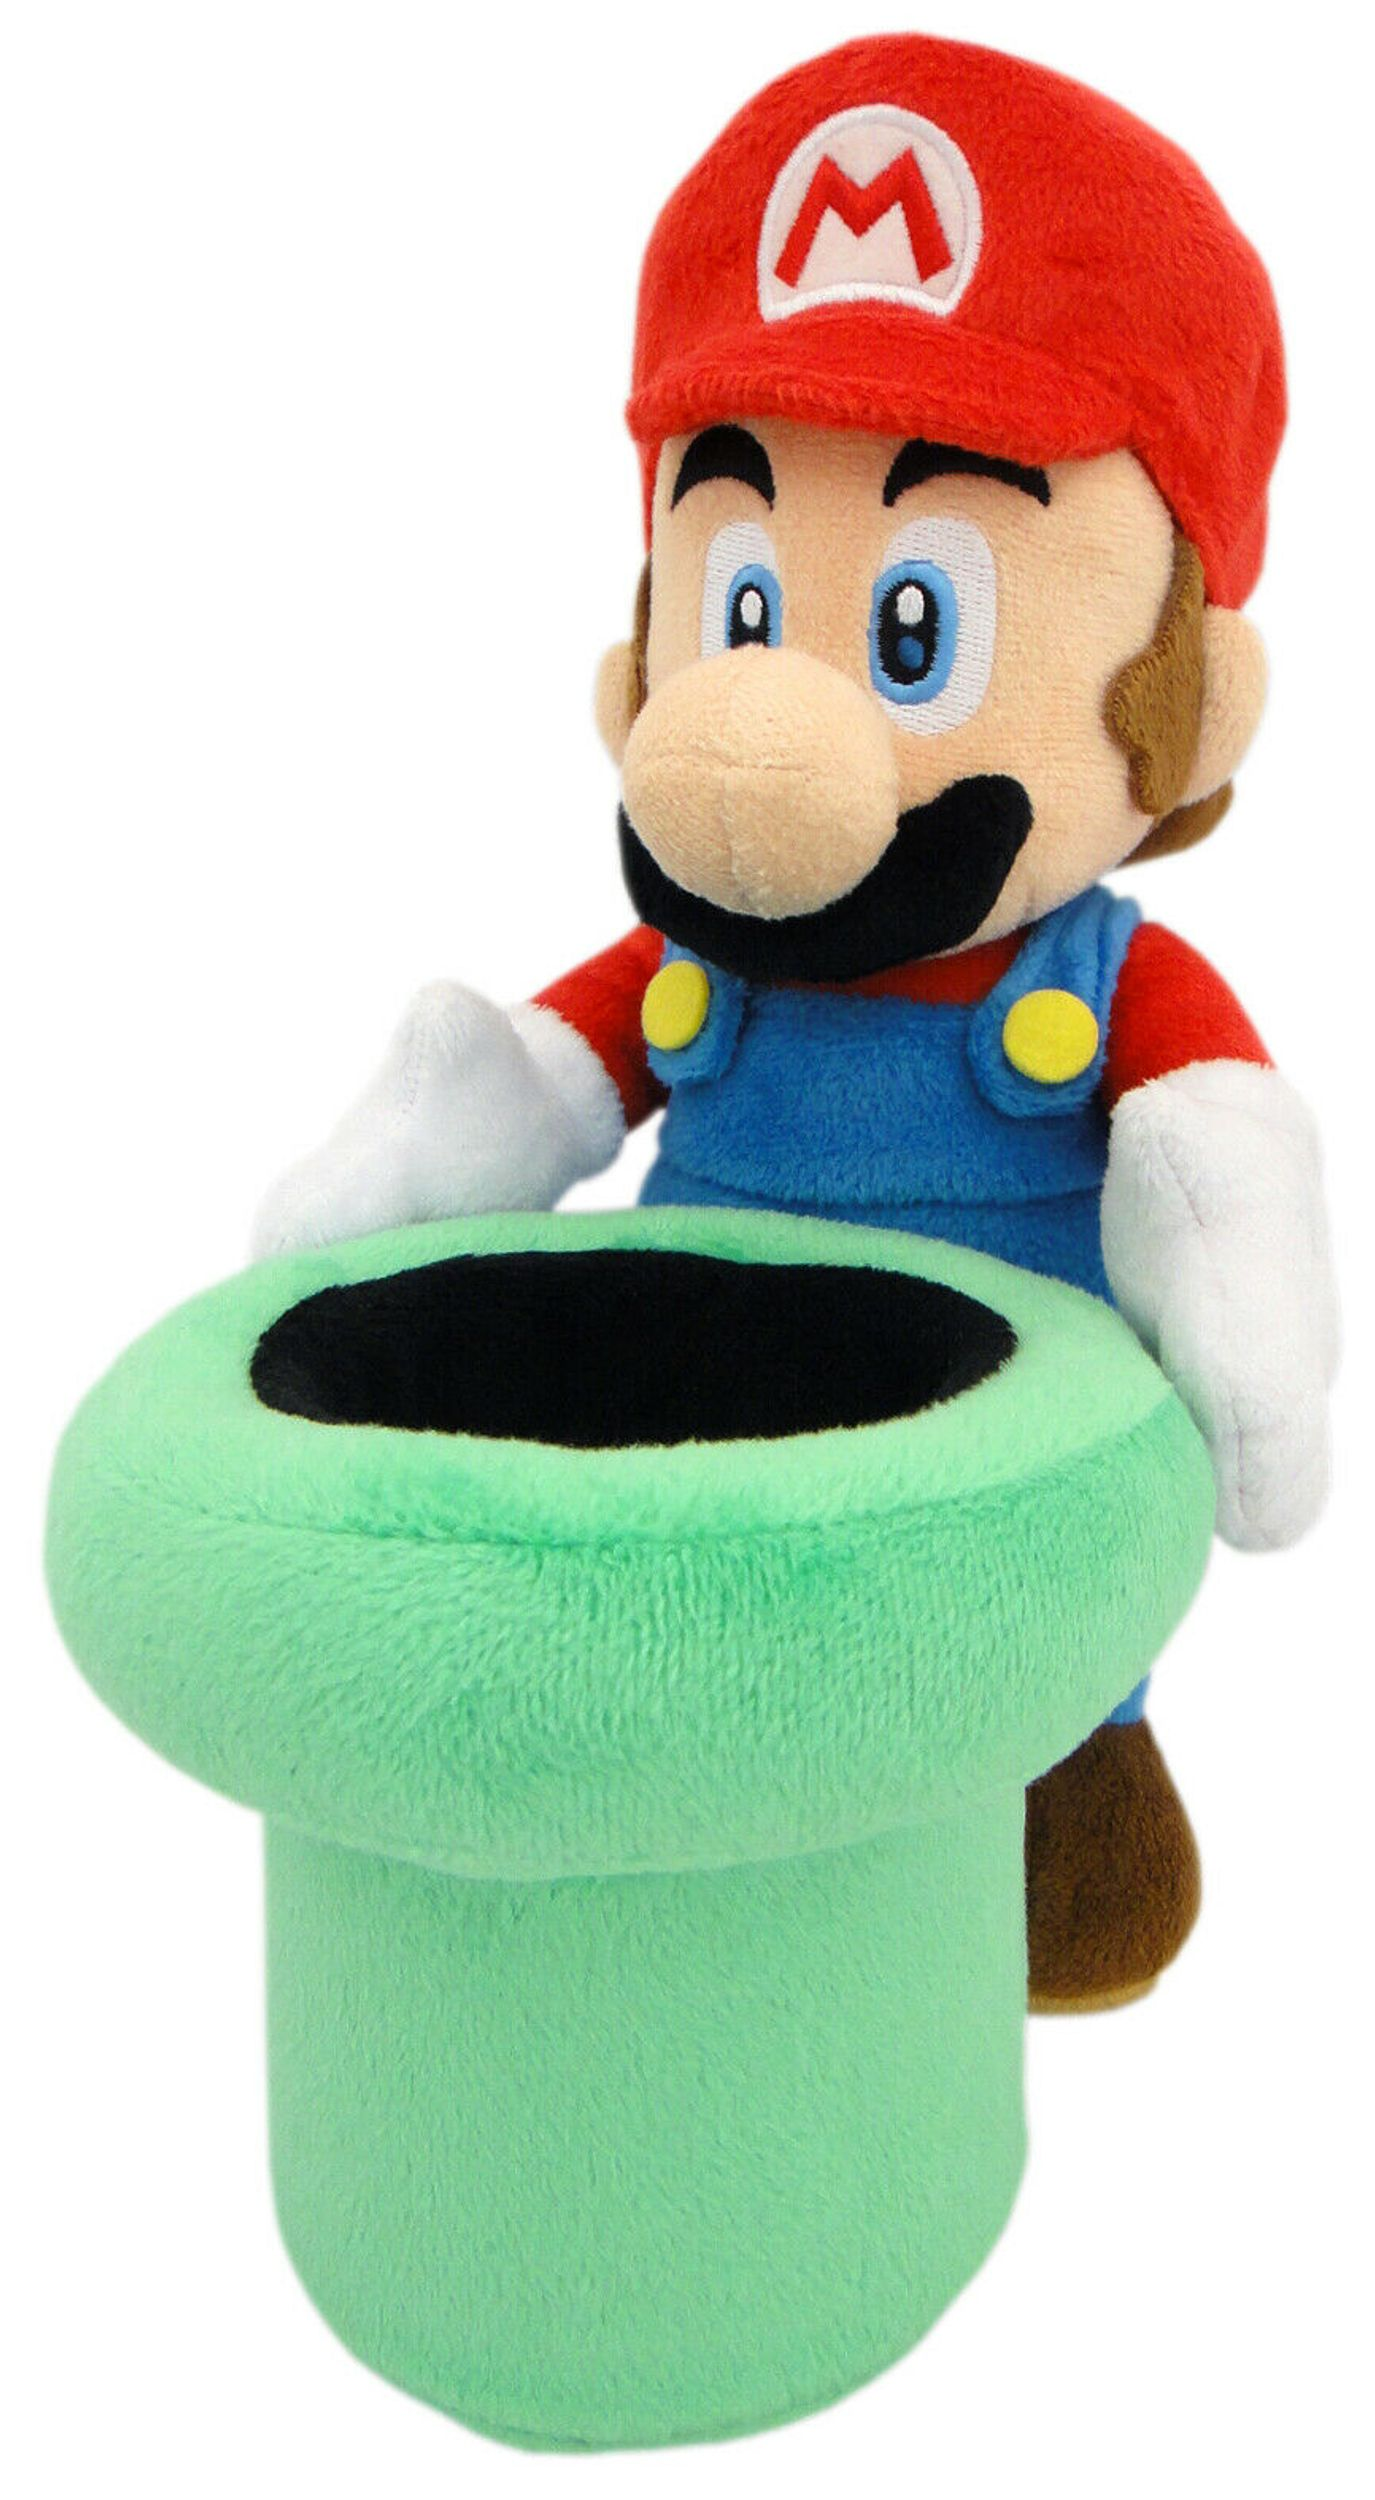 Super NINTENDO Mario Plüschfigur